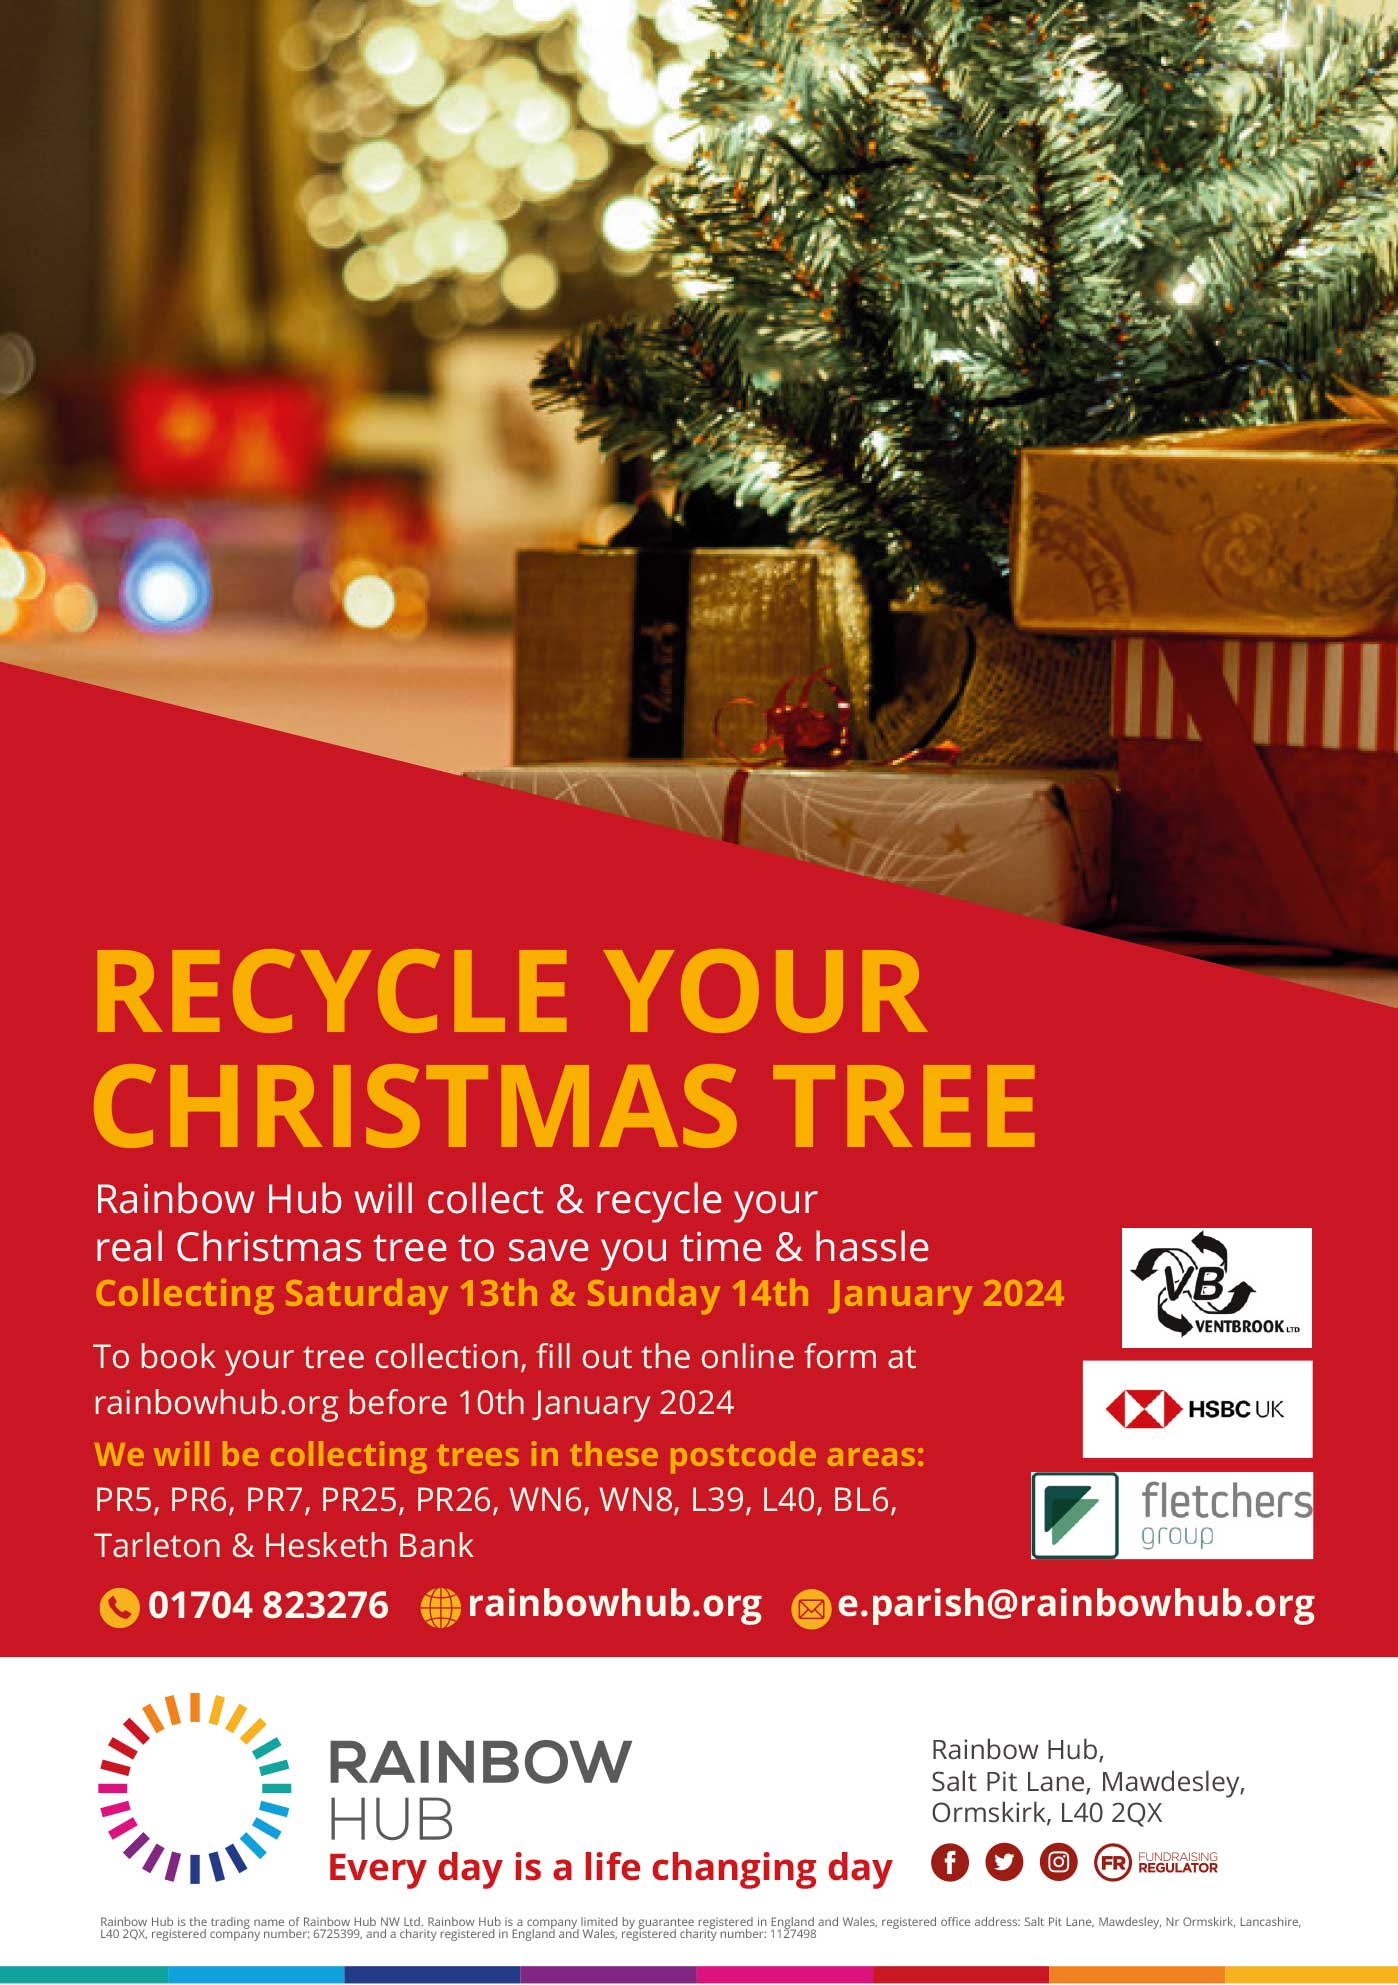 The Rainbow Hub Christmas tree collection fund raiser